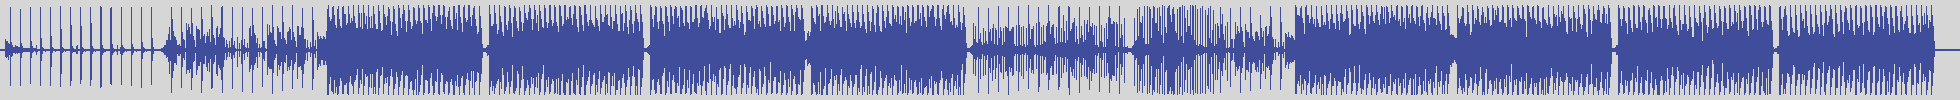 nf_boyz_records [NFY063] Gongo - I Feel It [Original Mix] audio wave form